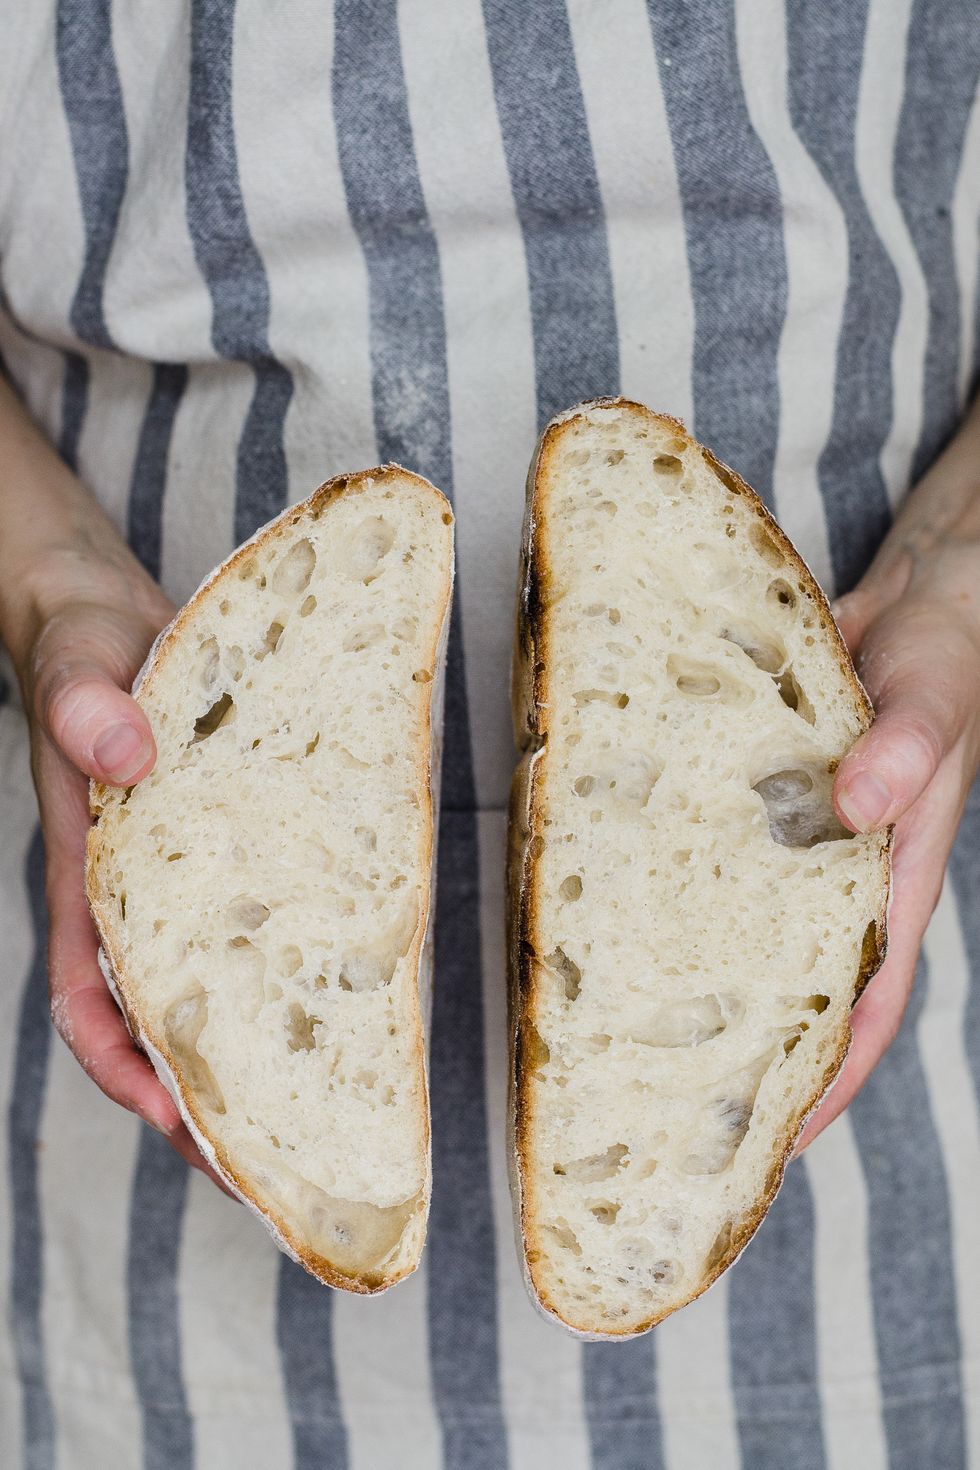 Homemade Sourdough: Easy, At-Home Artisan Bread Making